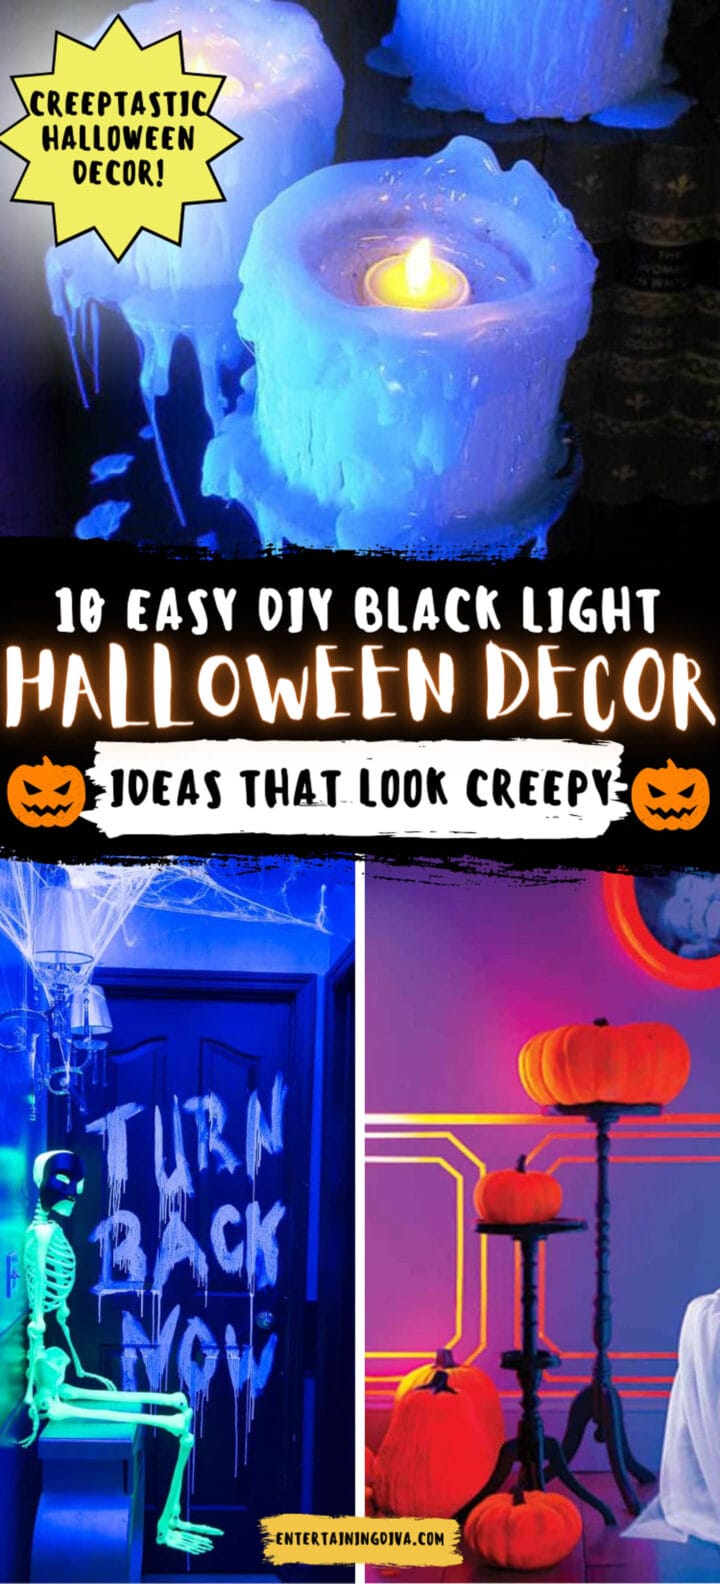 10 Easy DIY Black Light Halloween Decorations